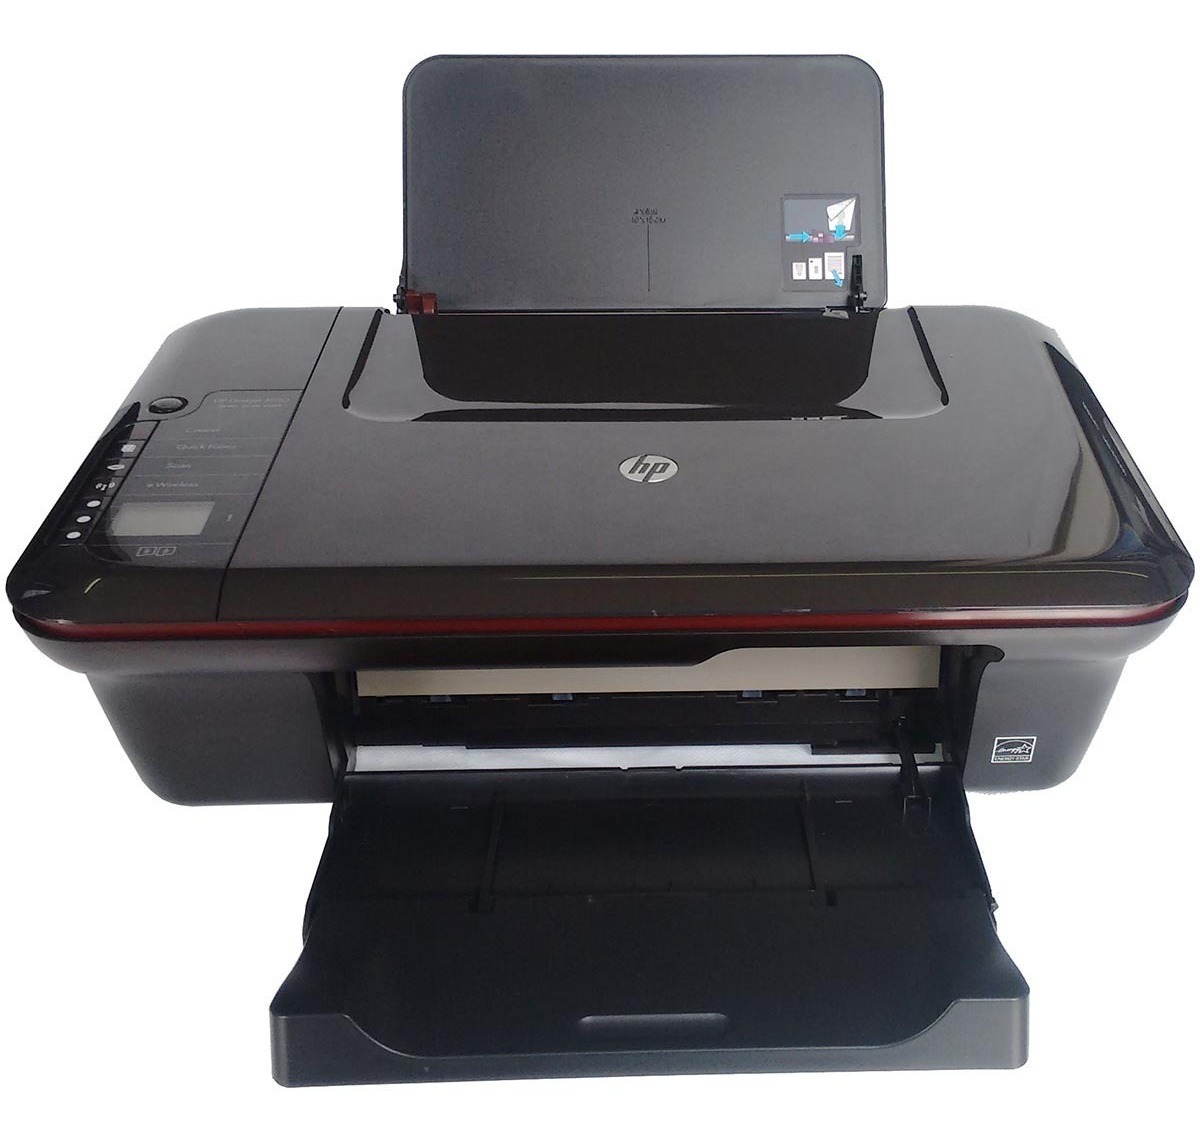 Impressora Multifuncional Hp Deskjet 3050 Com Wifi R 200 00 Em